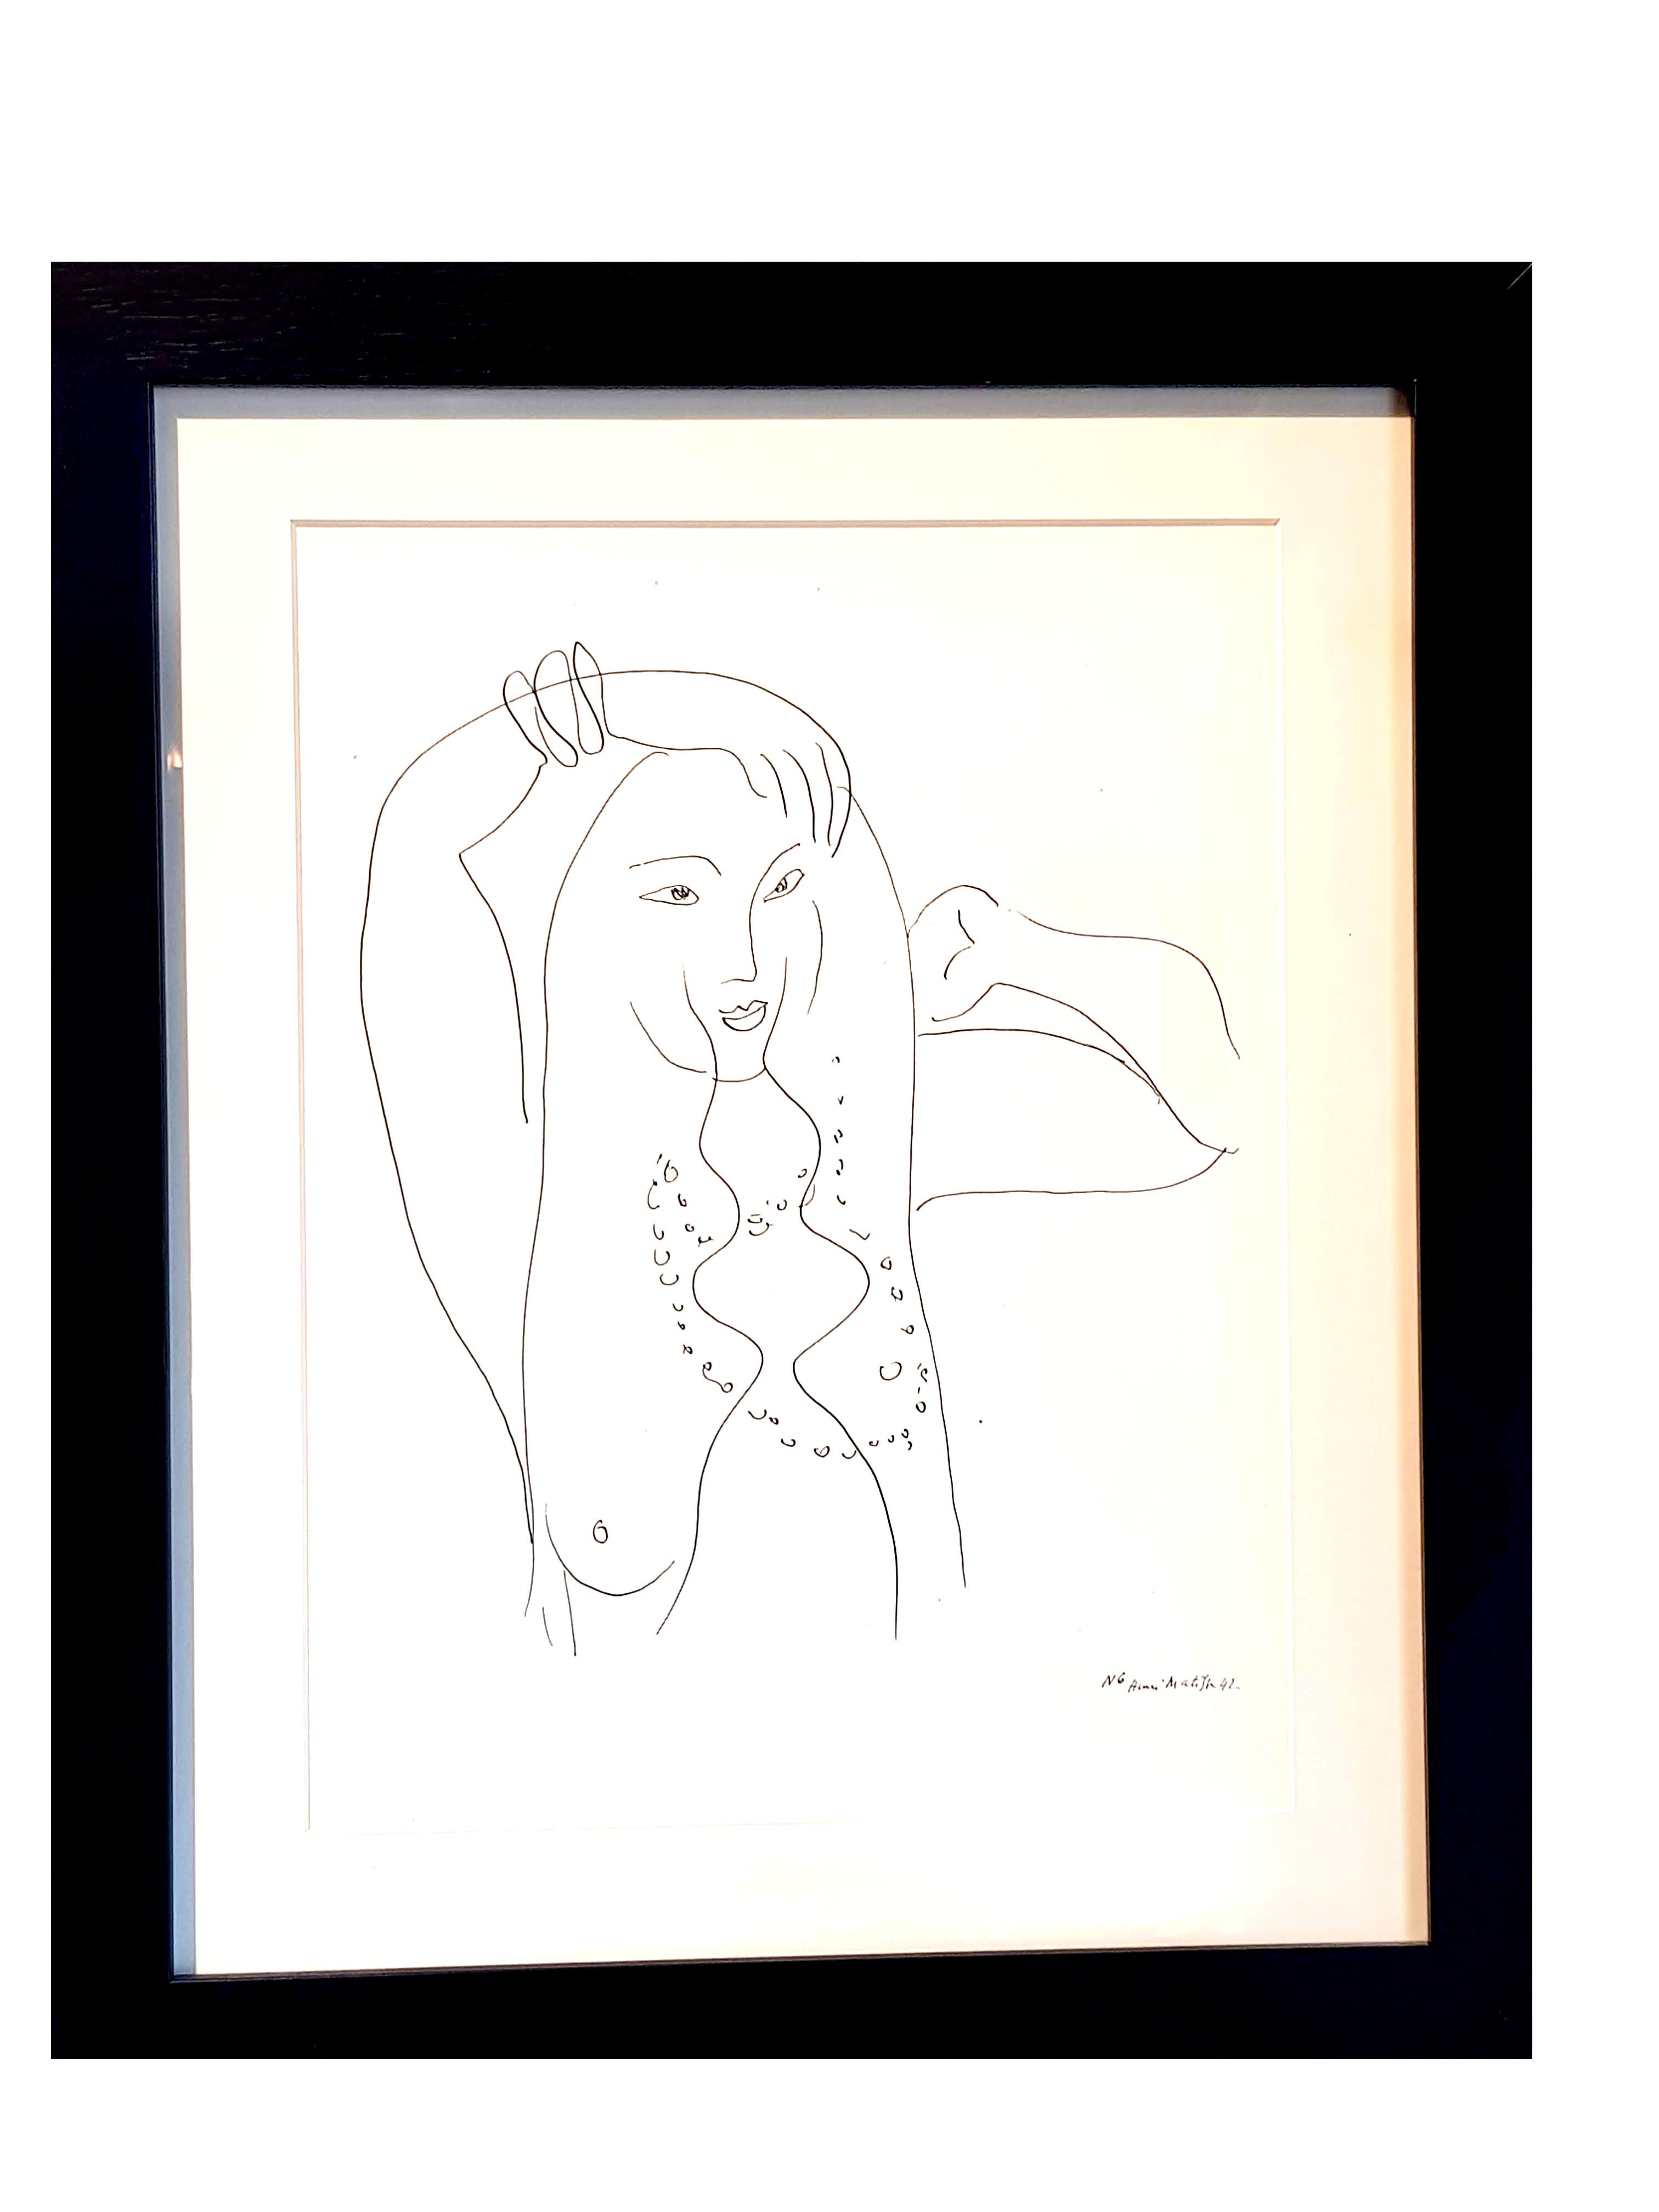 (after) Henri Matisse Portrait Print - Henri Matisse (After) - Lithograph - Woman